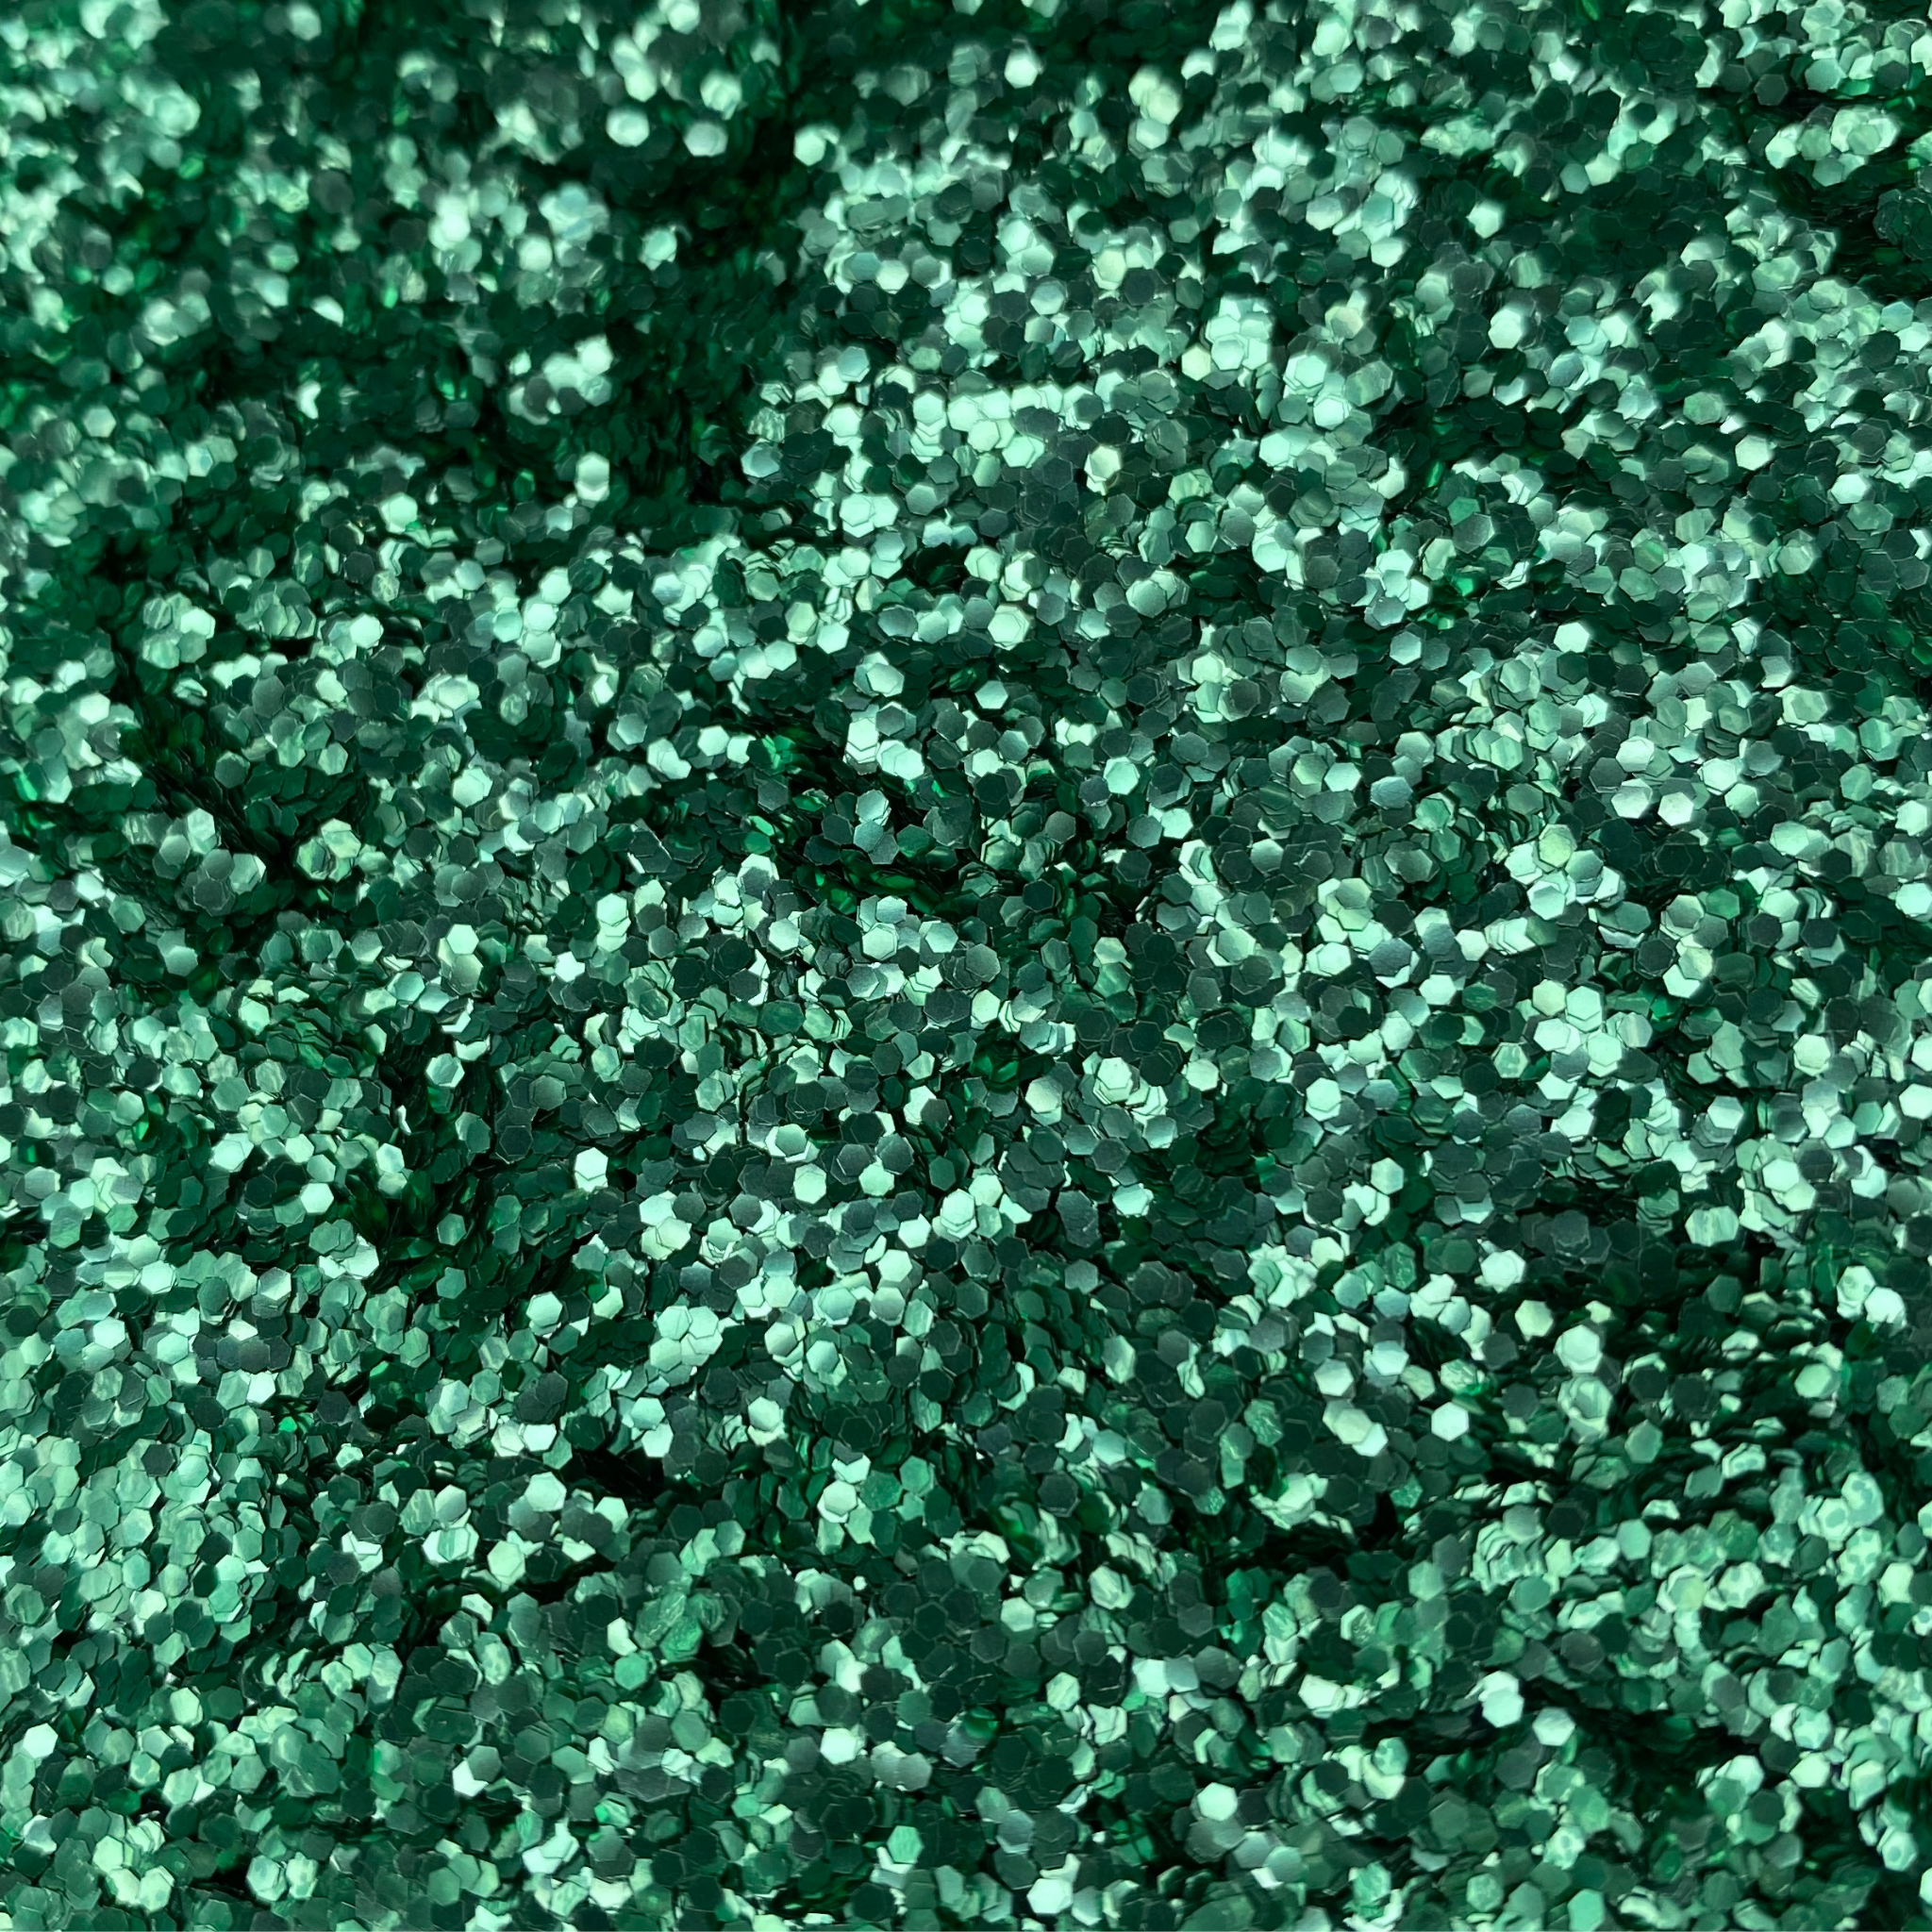 Chunky green eco glitter by Luminosity Glitter is 040 hex